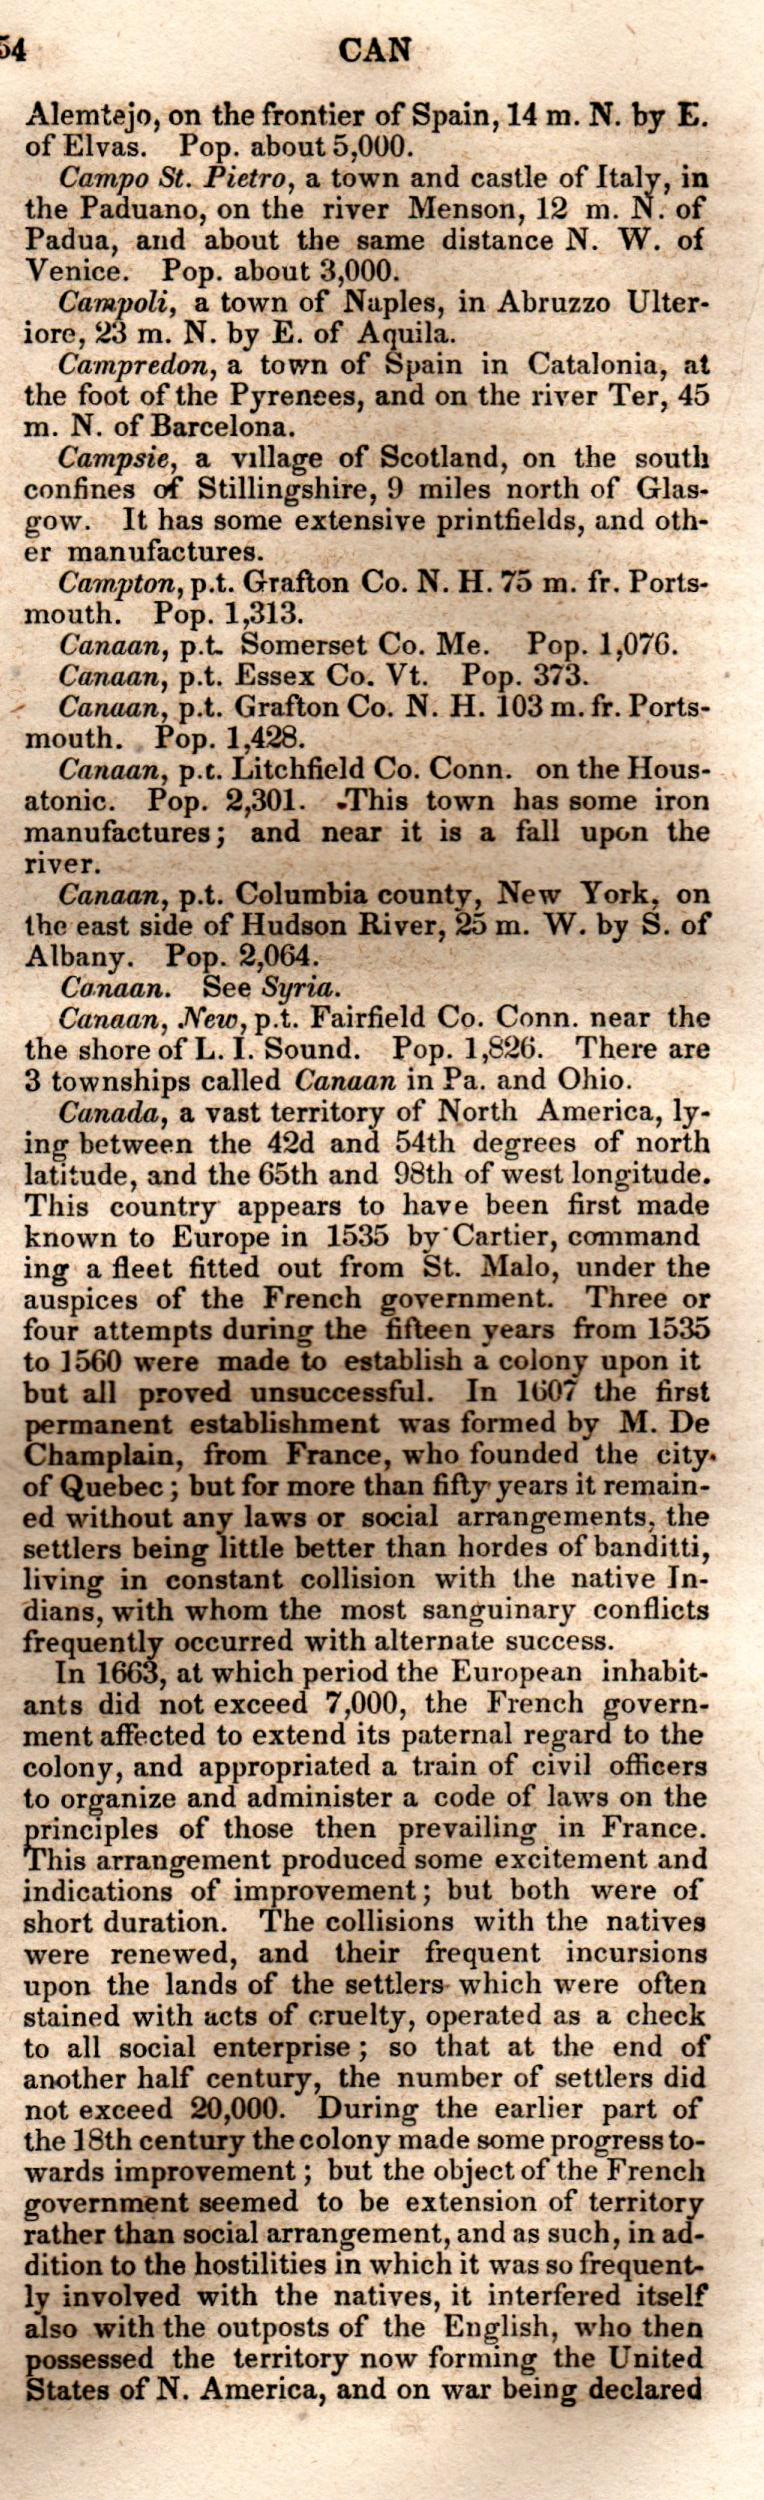 Brookes’ Universal Gazetteer (1850), Page 154 Right Column